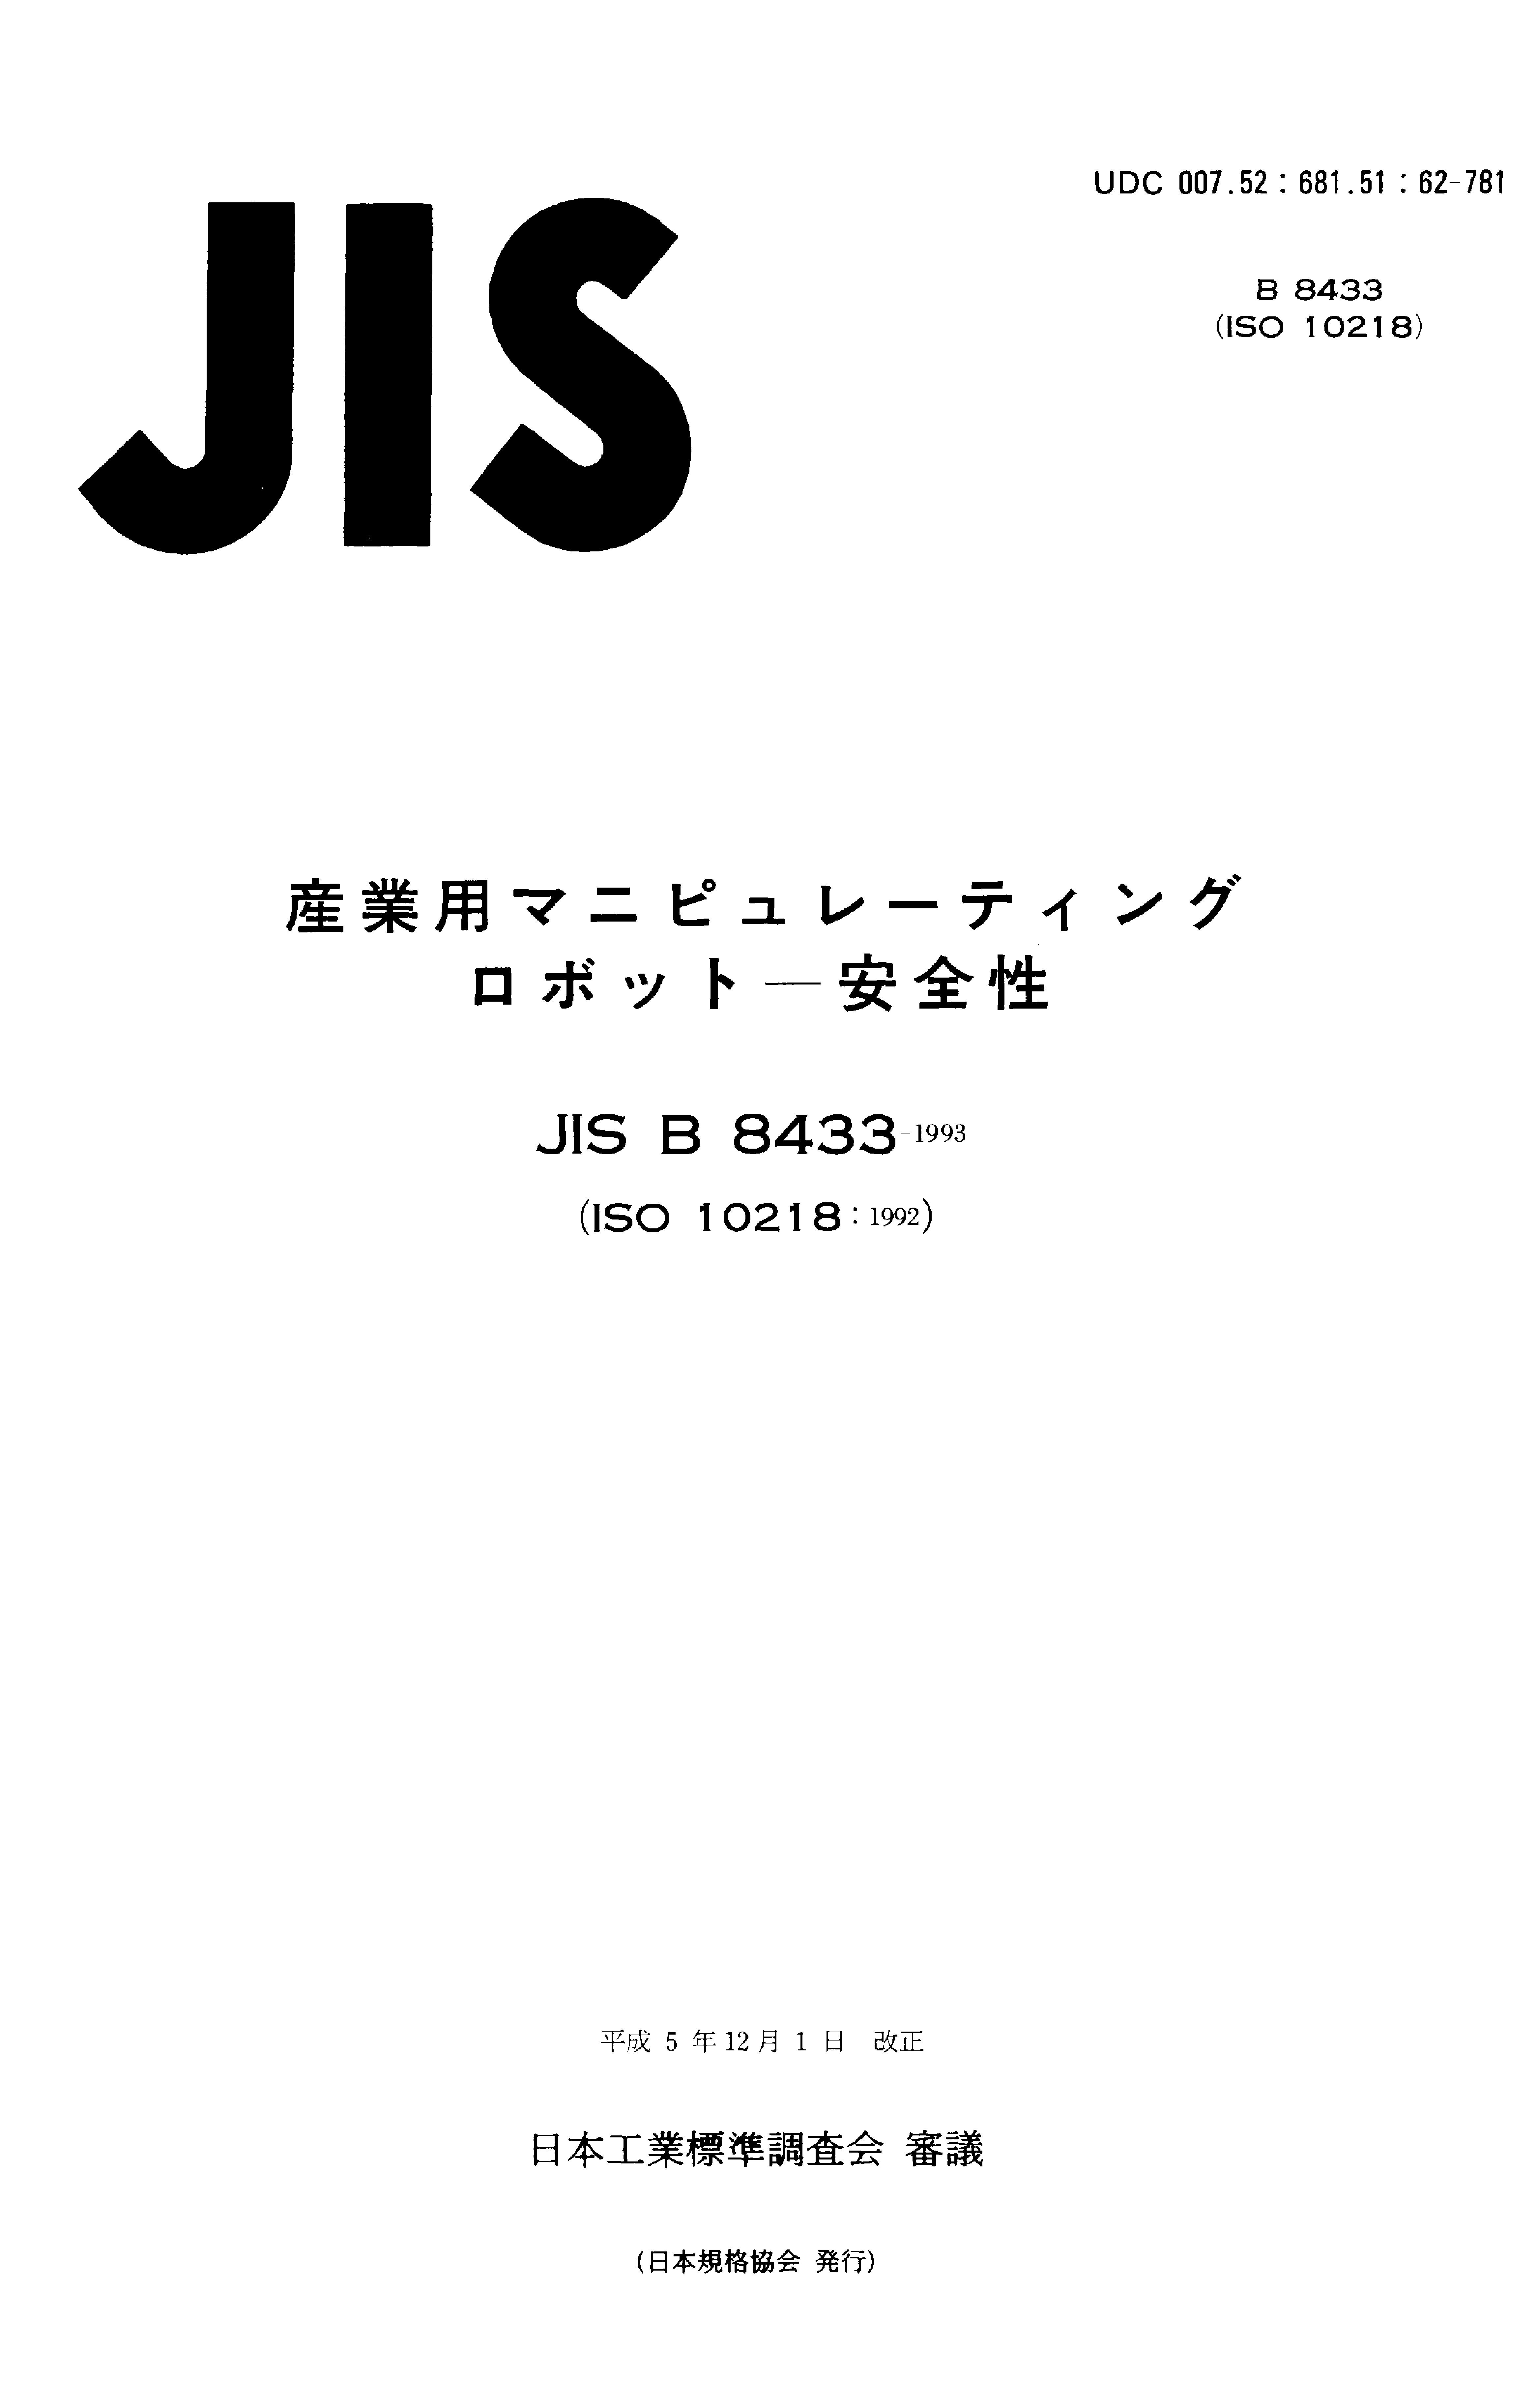 JIS B 8433:1993